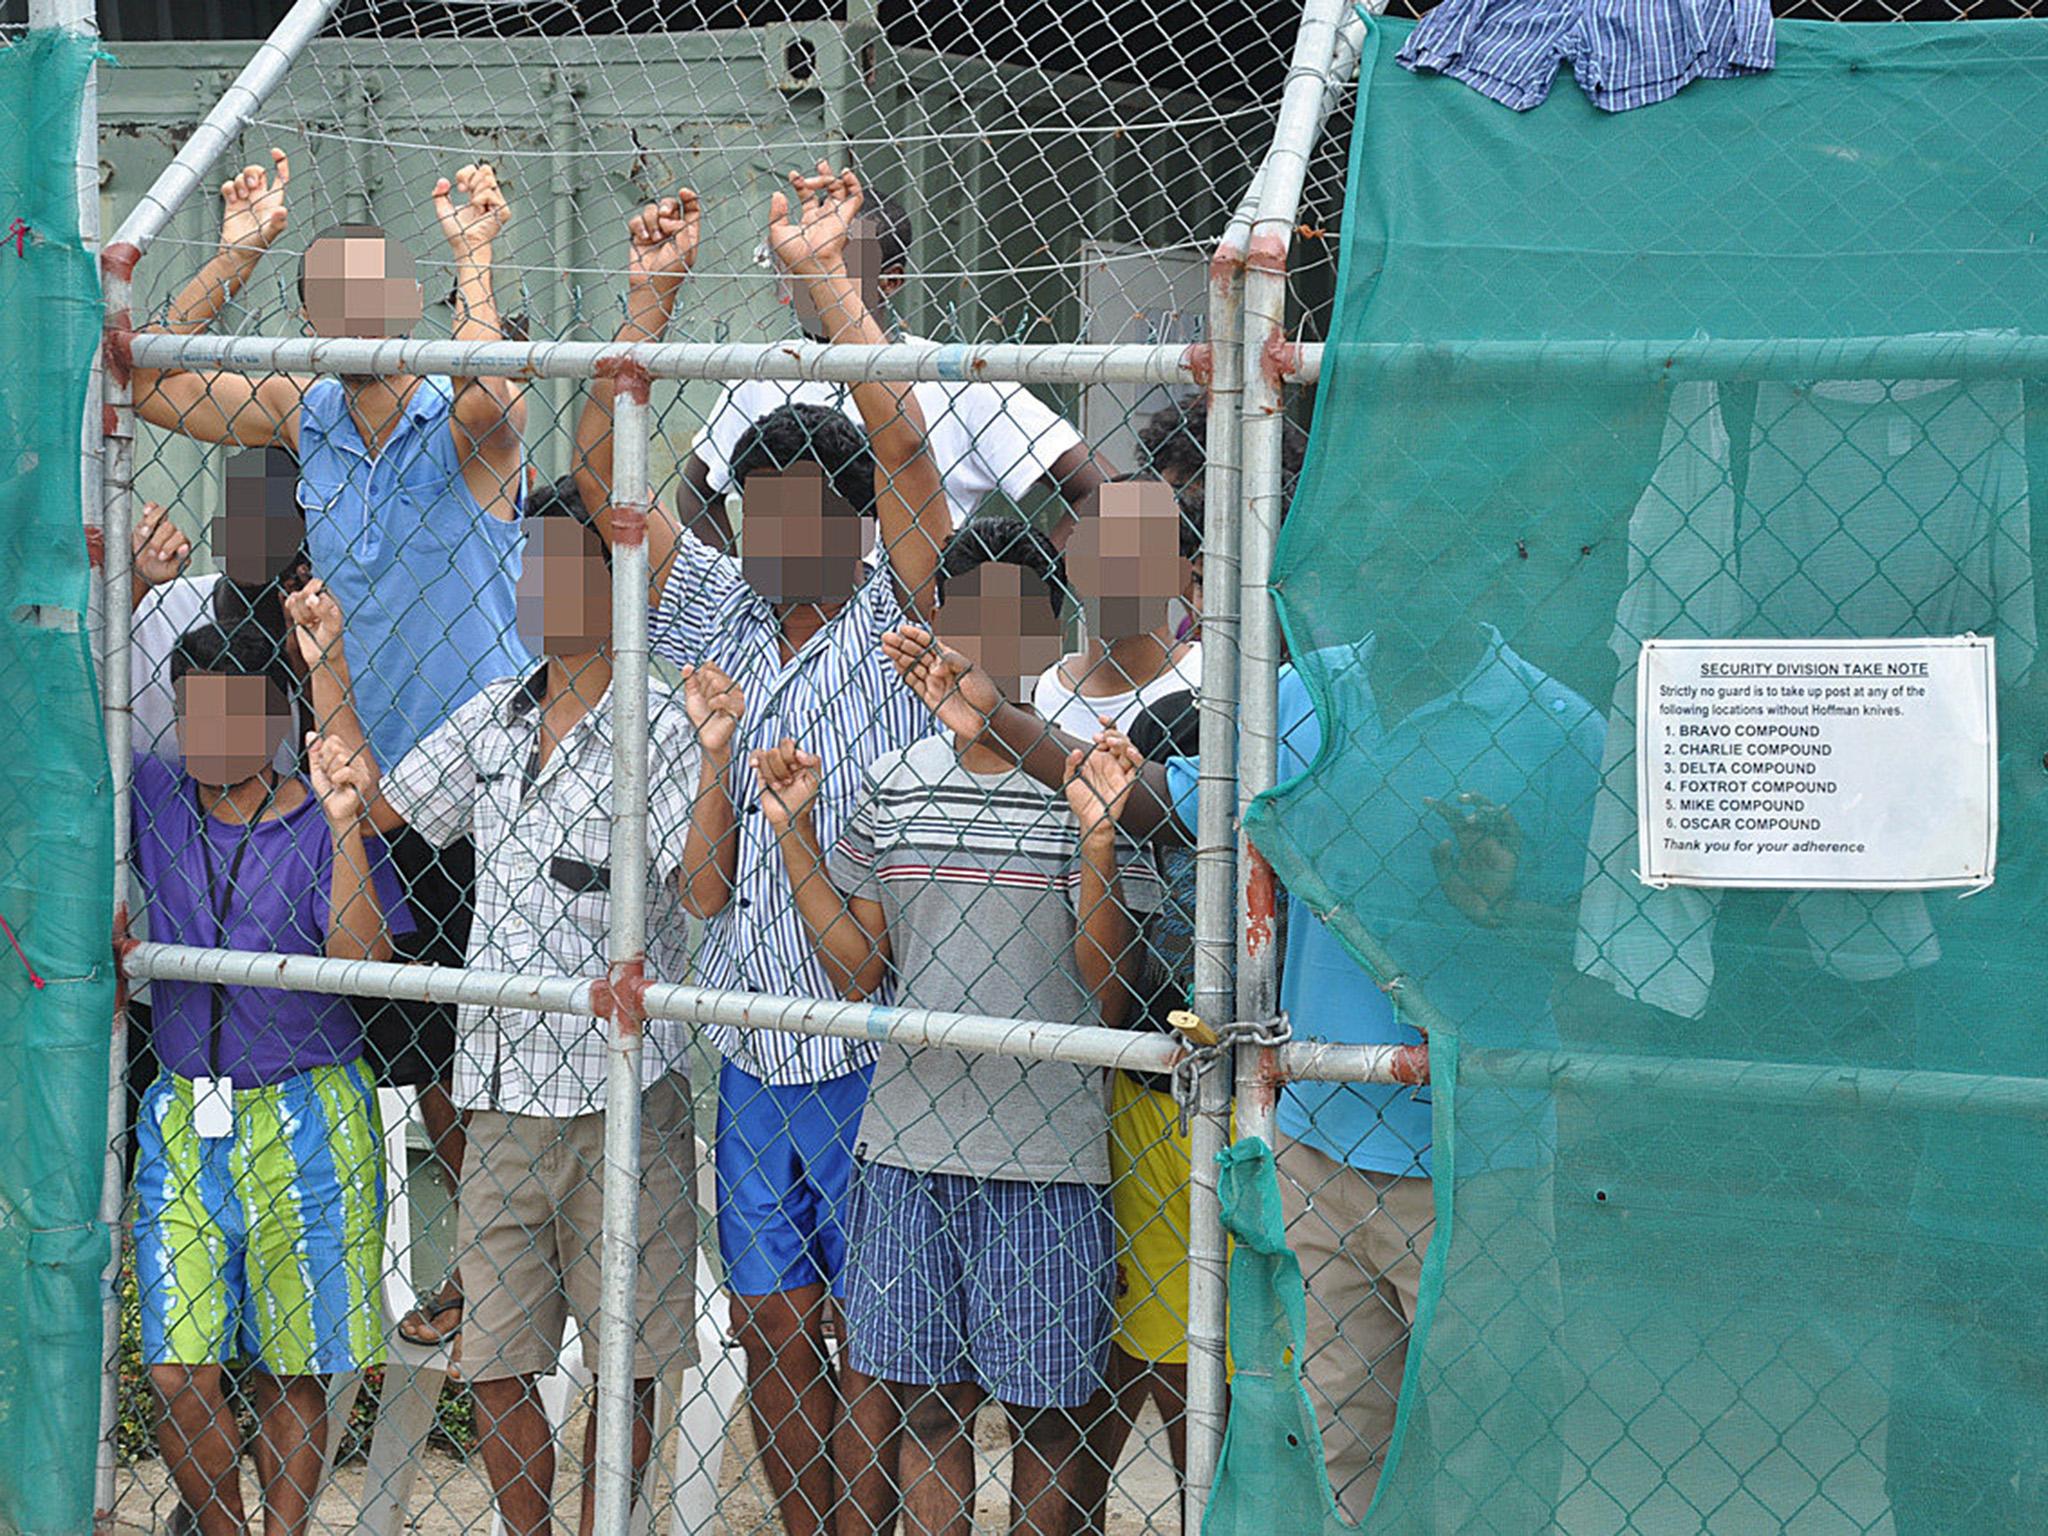 Alexander Downer was Australia’s foreign minister when it began detaining asylum seekers on Manus Island and Nauru